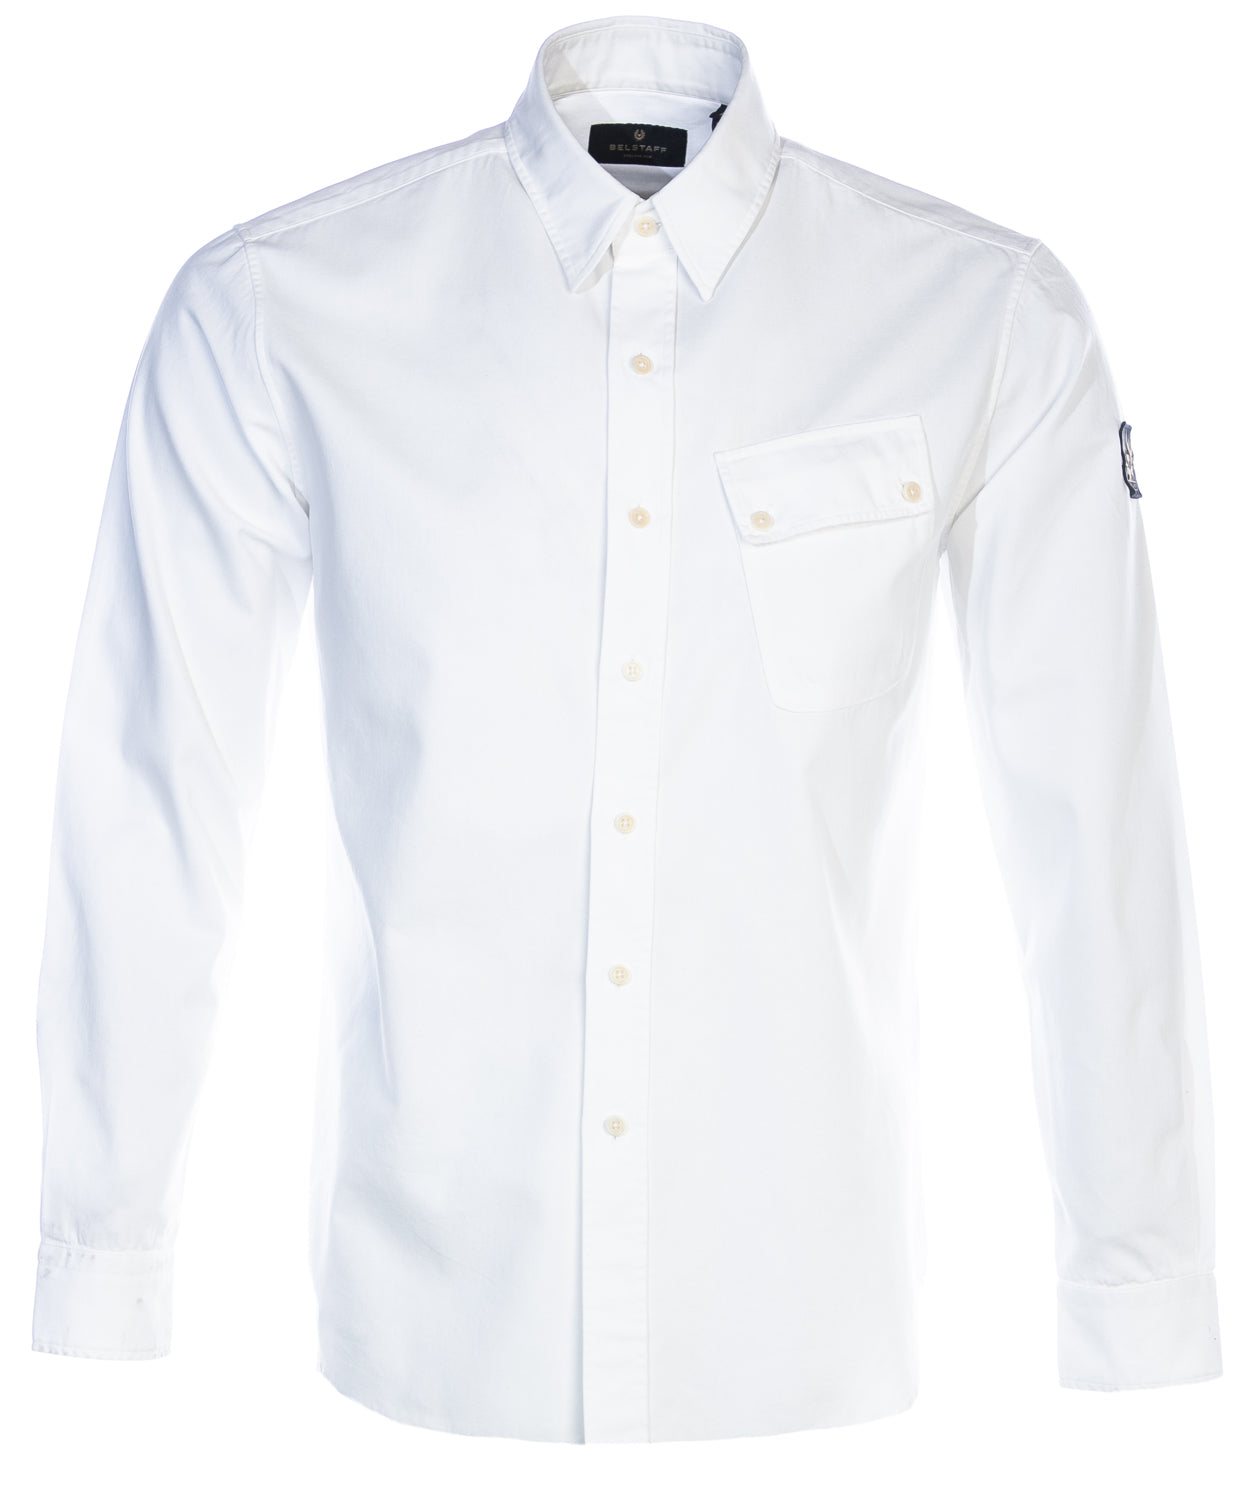 Belstaff Pitch Shirt in White